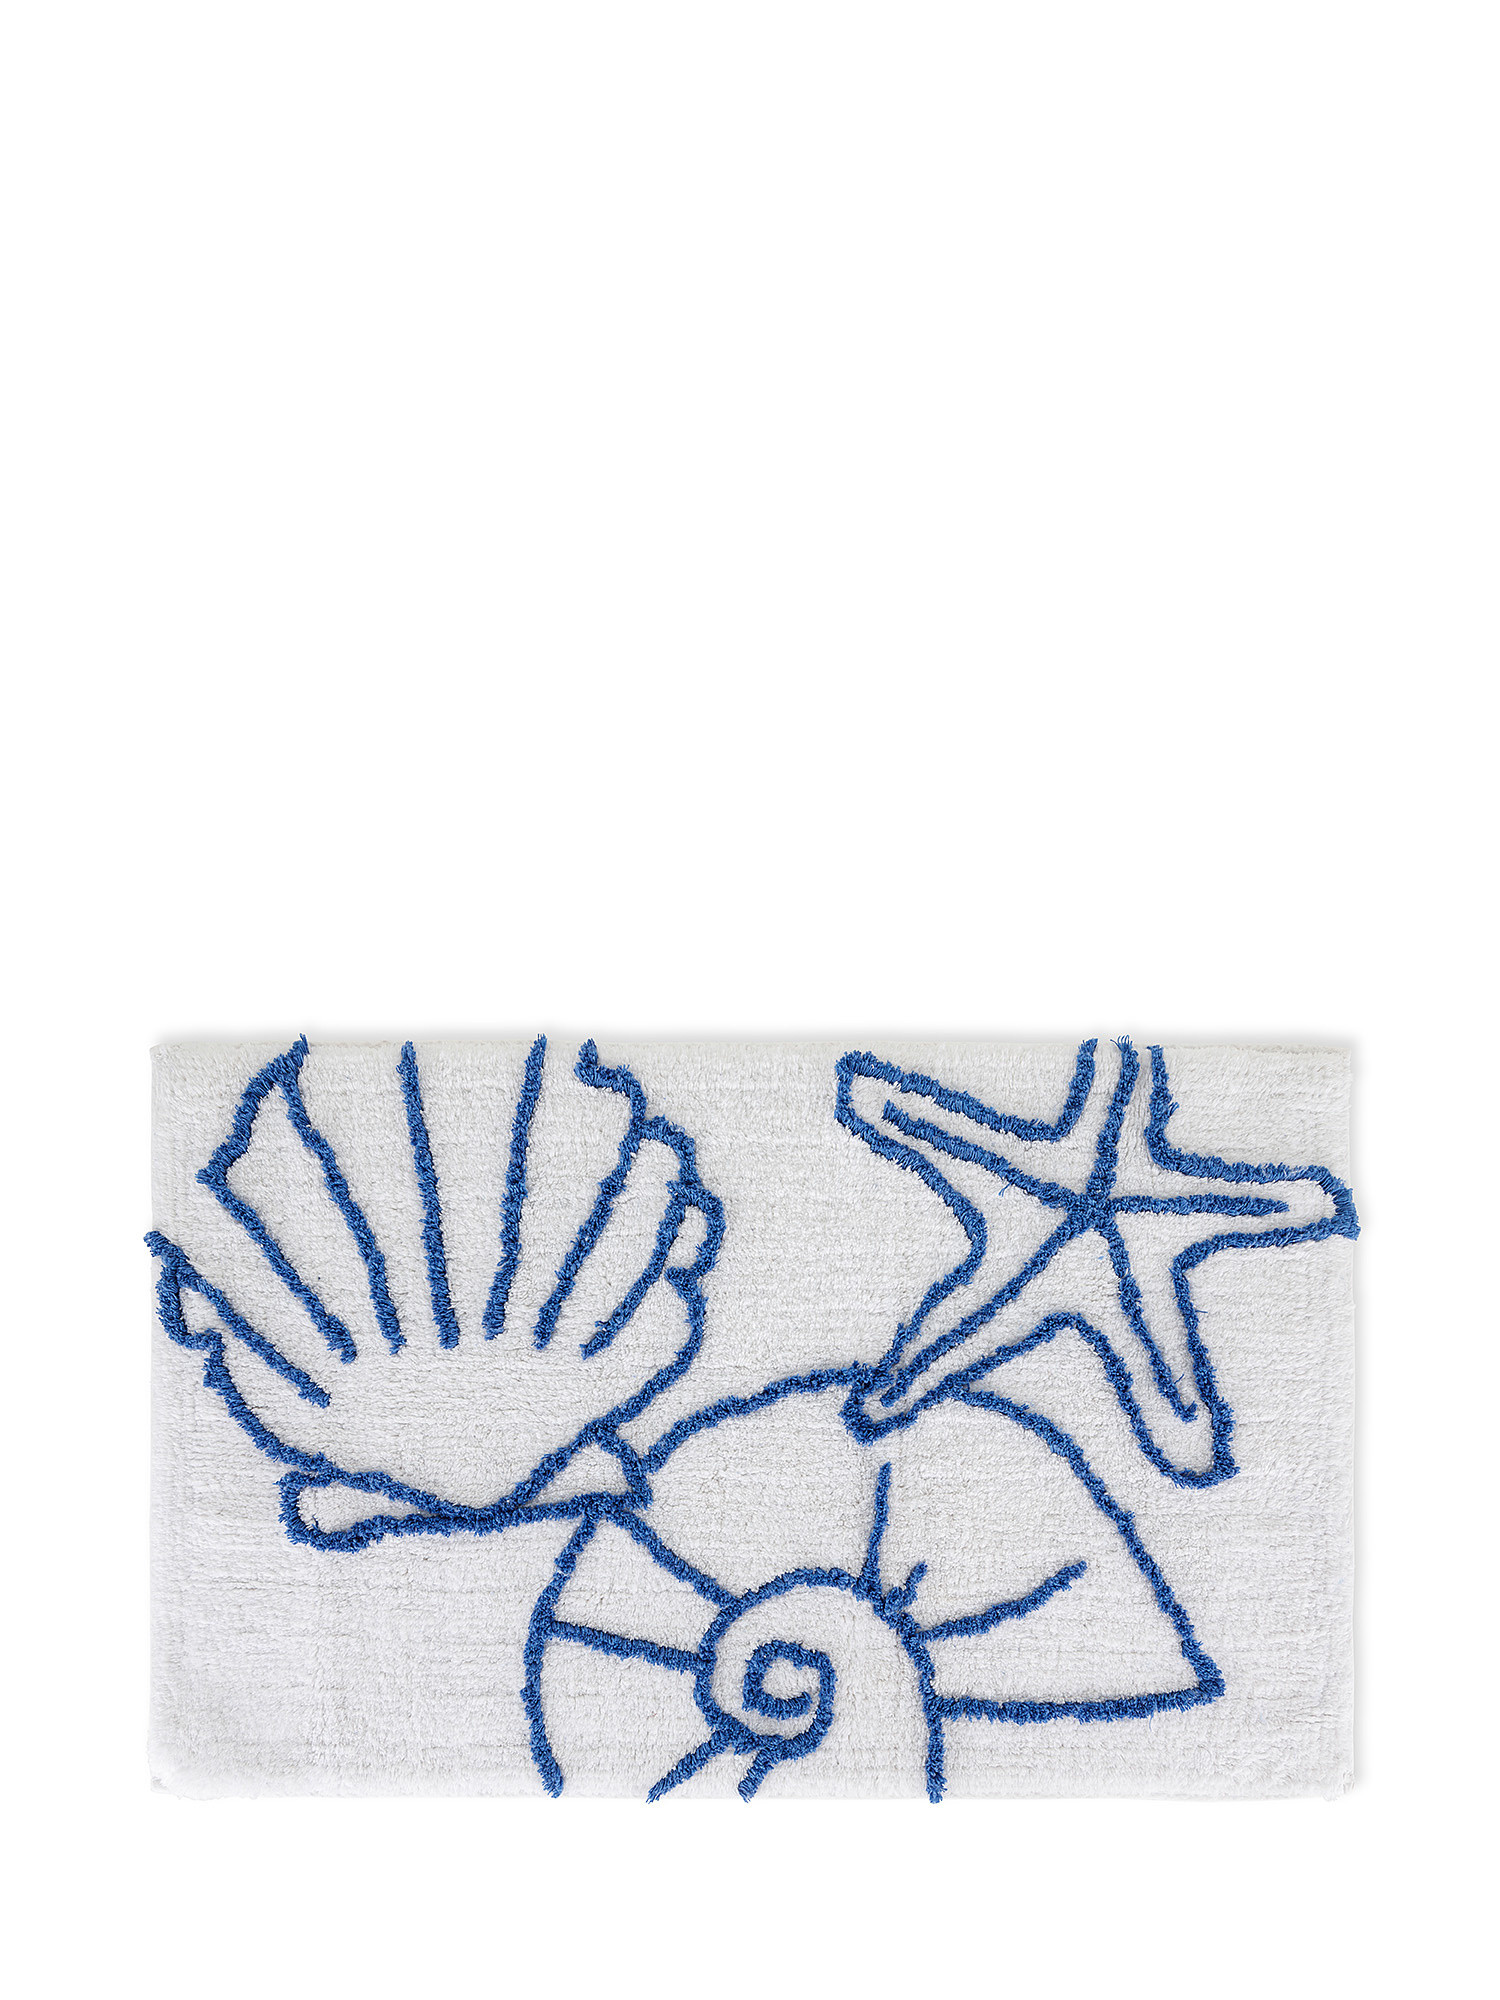 Tappeto bagno cotone motivo conchiglie, Blu, large image number 0